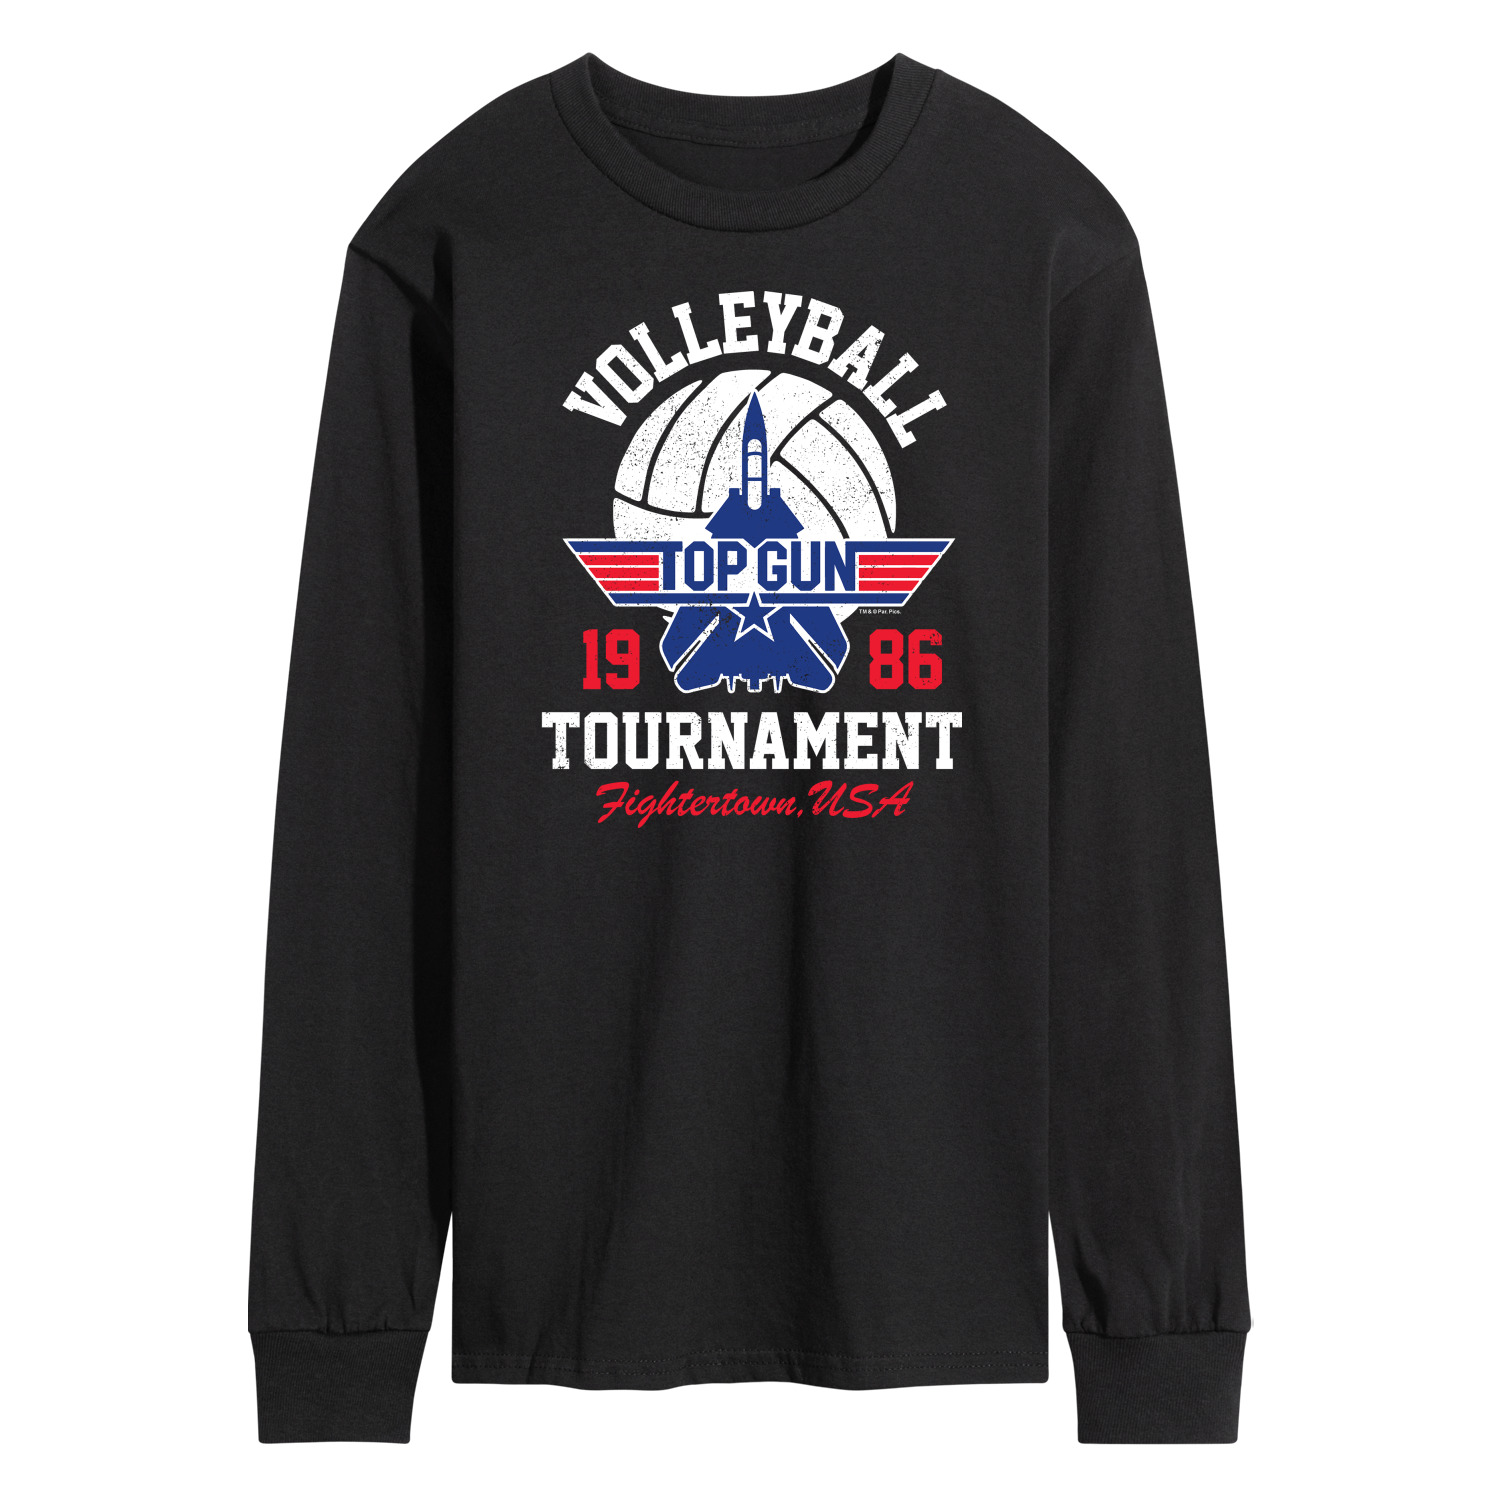 Top Gun - Volleyball Tournament - Men's Long Sleeve Graphic T